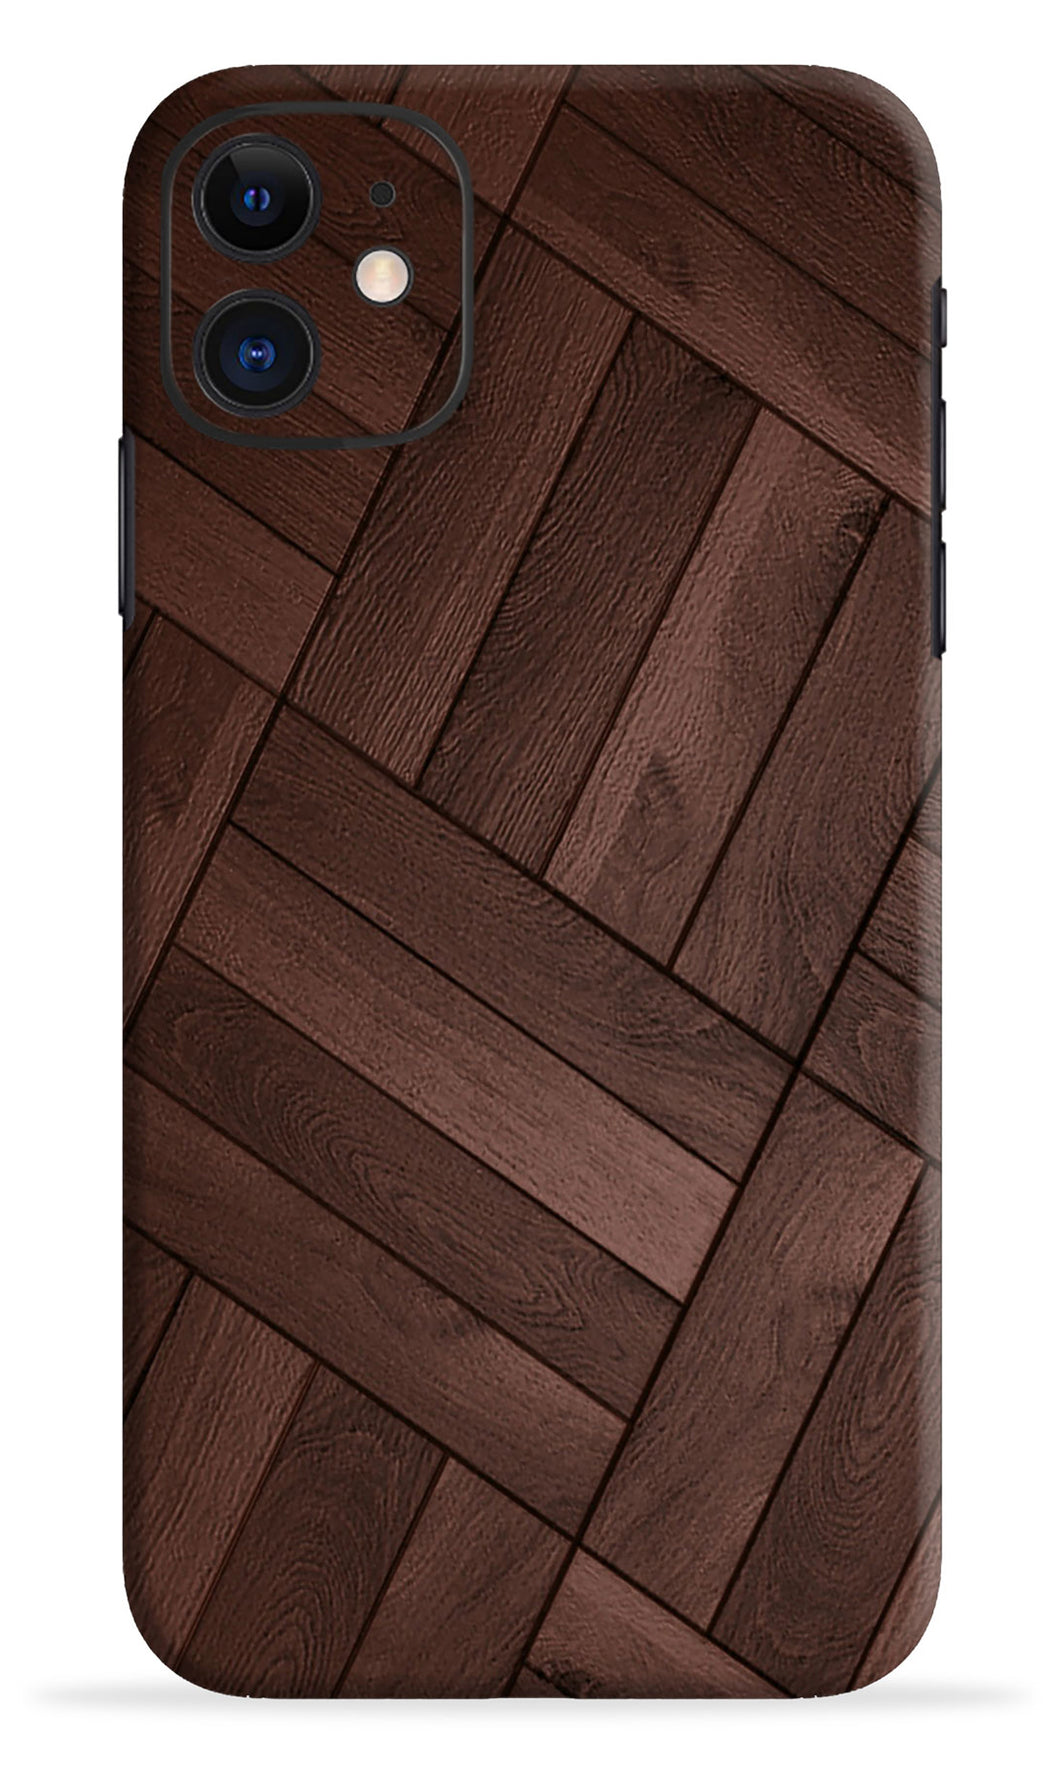 Wooden Texture Design Mobile Skin